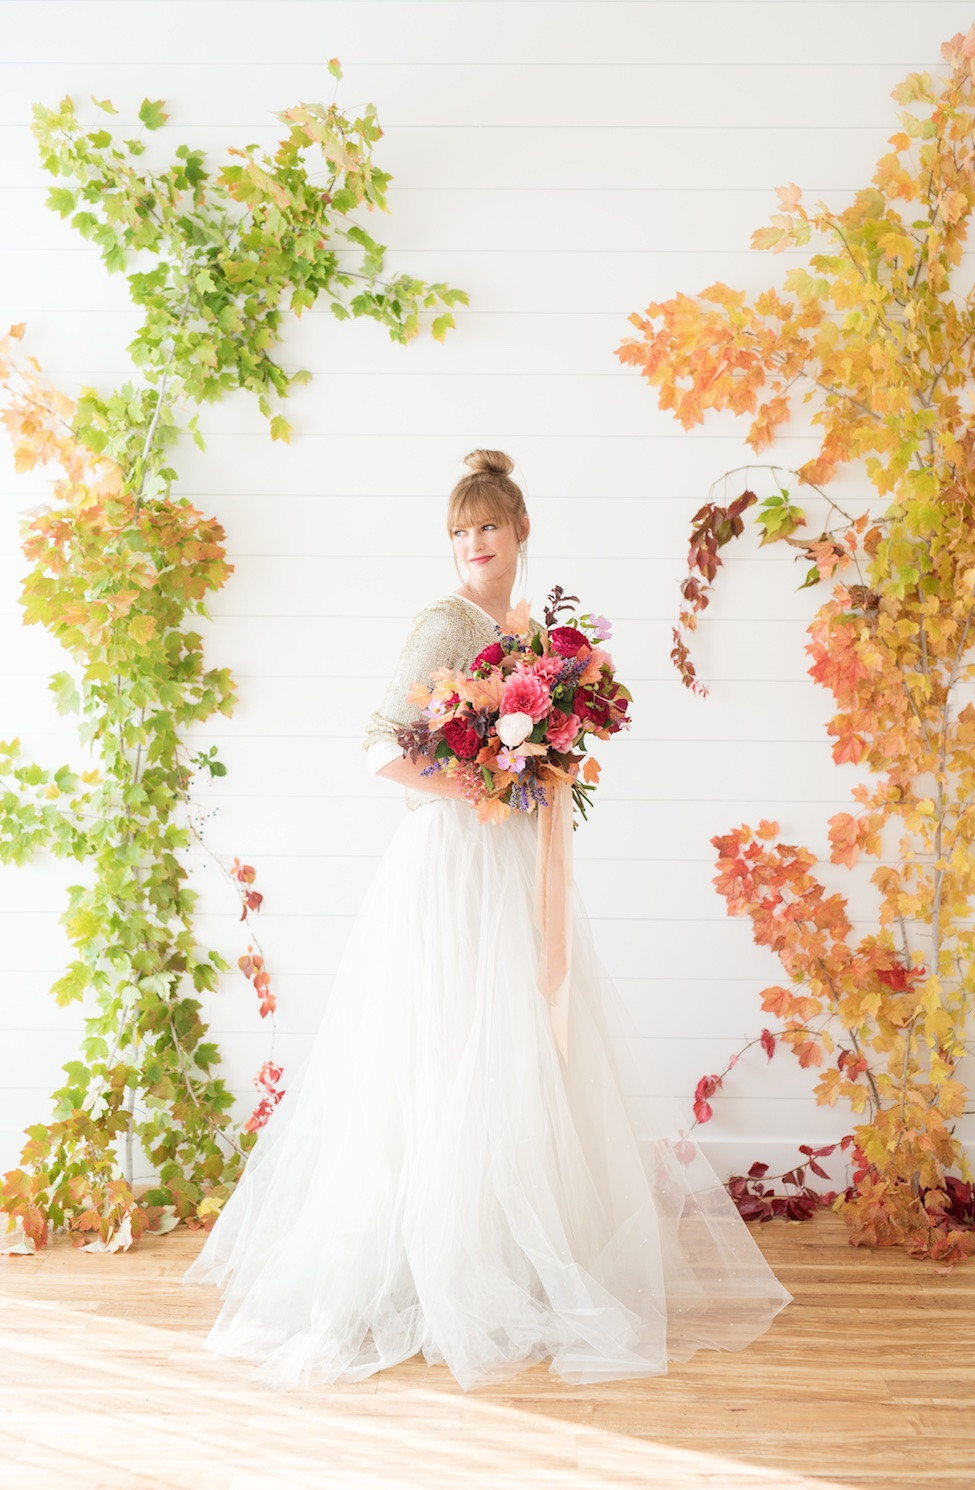 Wedding Ceremony Backdrops DIY
 Stunning Fall Wedding Backdrops DIY